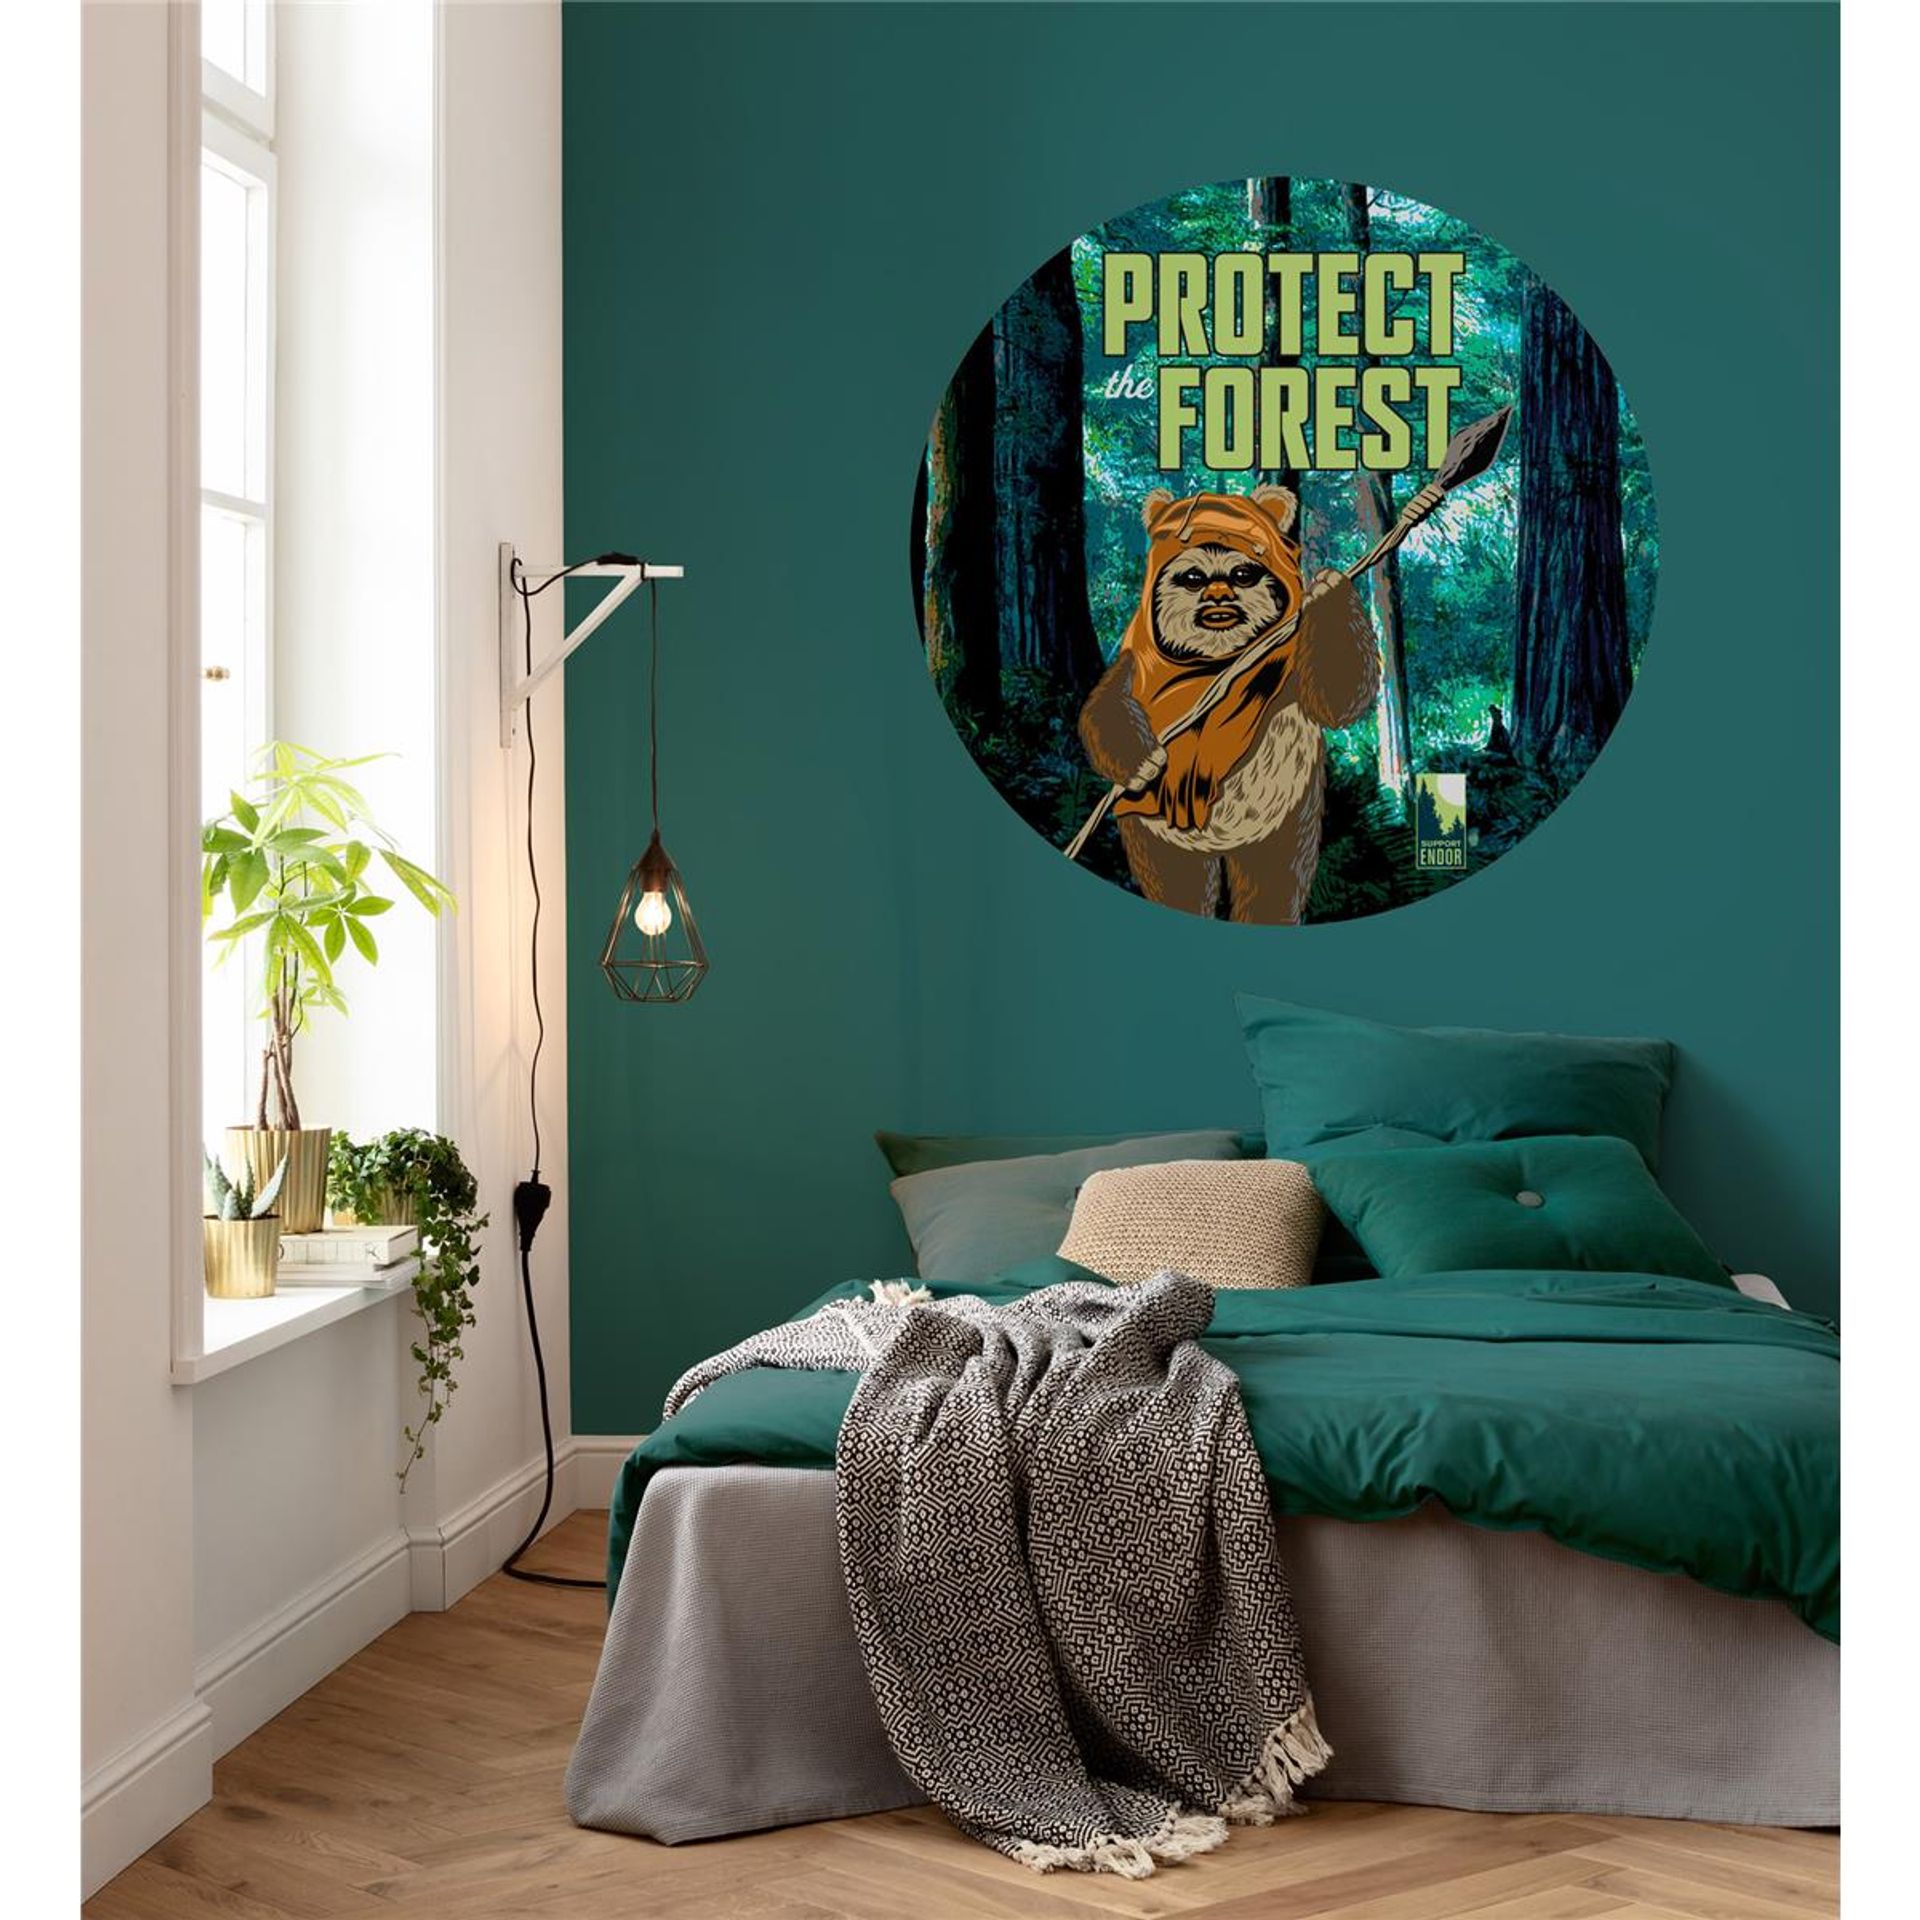 Selbstklebende Vlies Fototapete/Wandtattoo - Star Wars Protect the Forest - Größe 125 x 125 cm